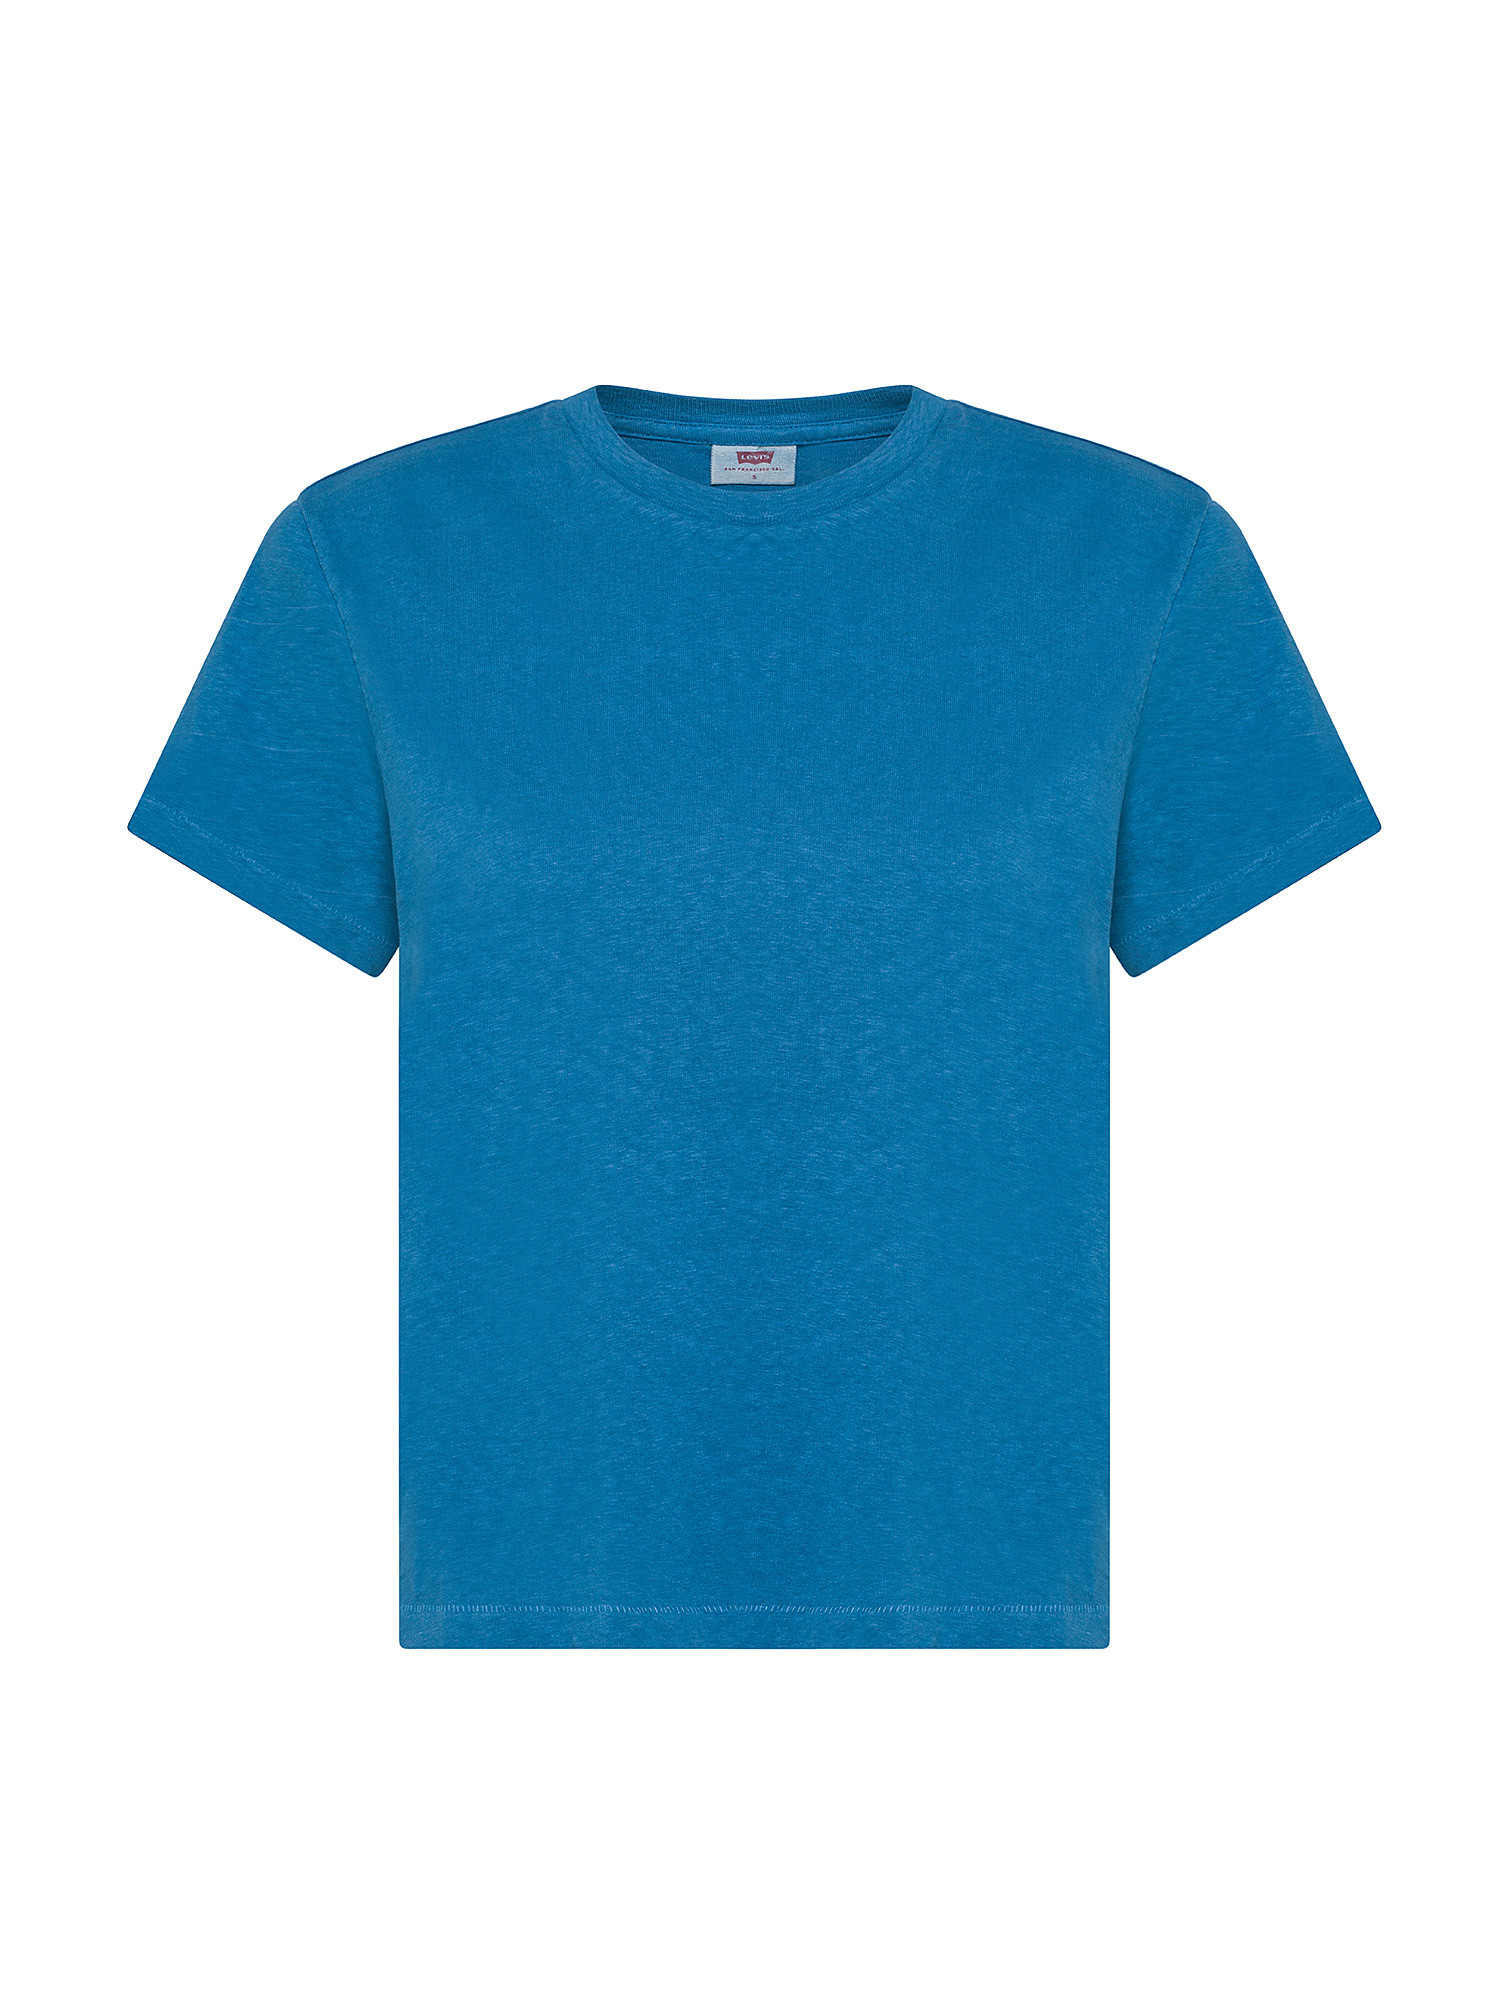 Levi's - Cotton T-shirt, Light Blue, large image number 0